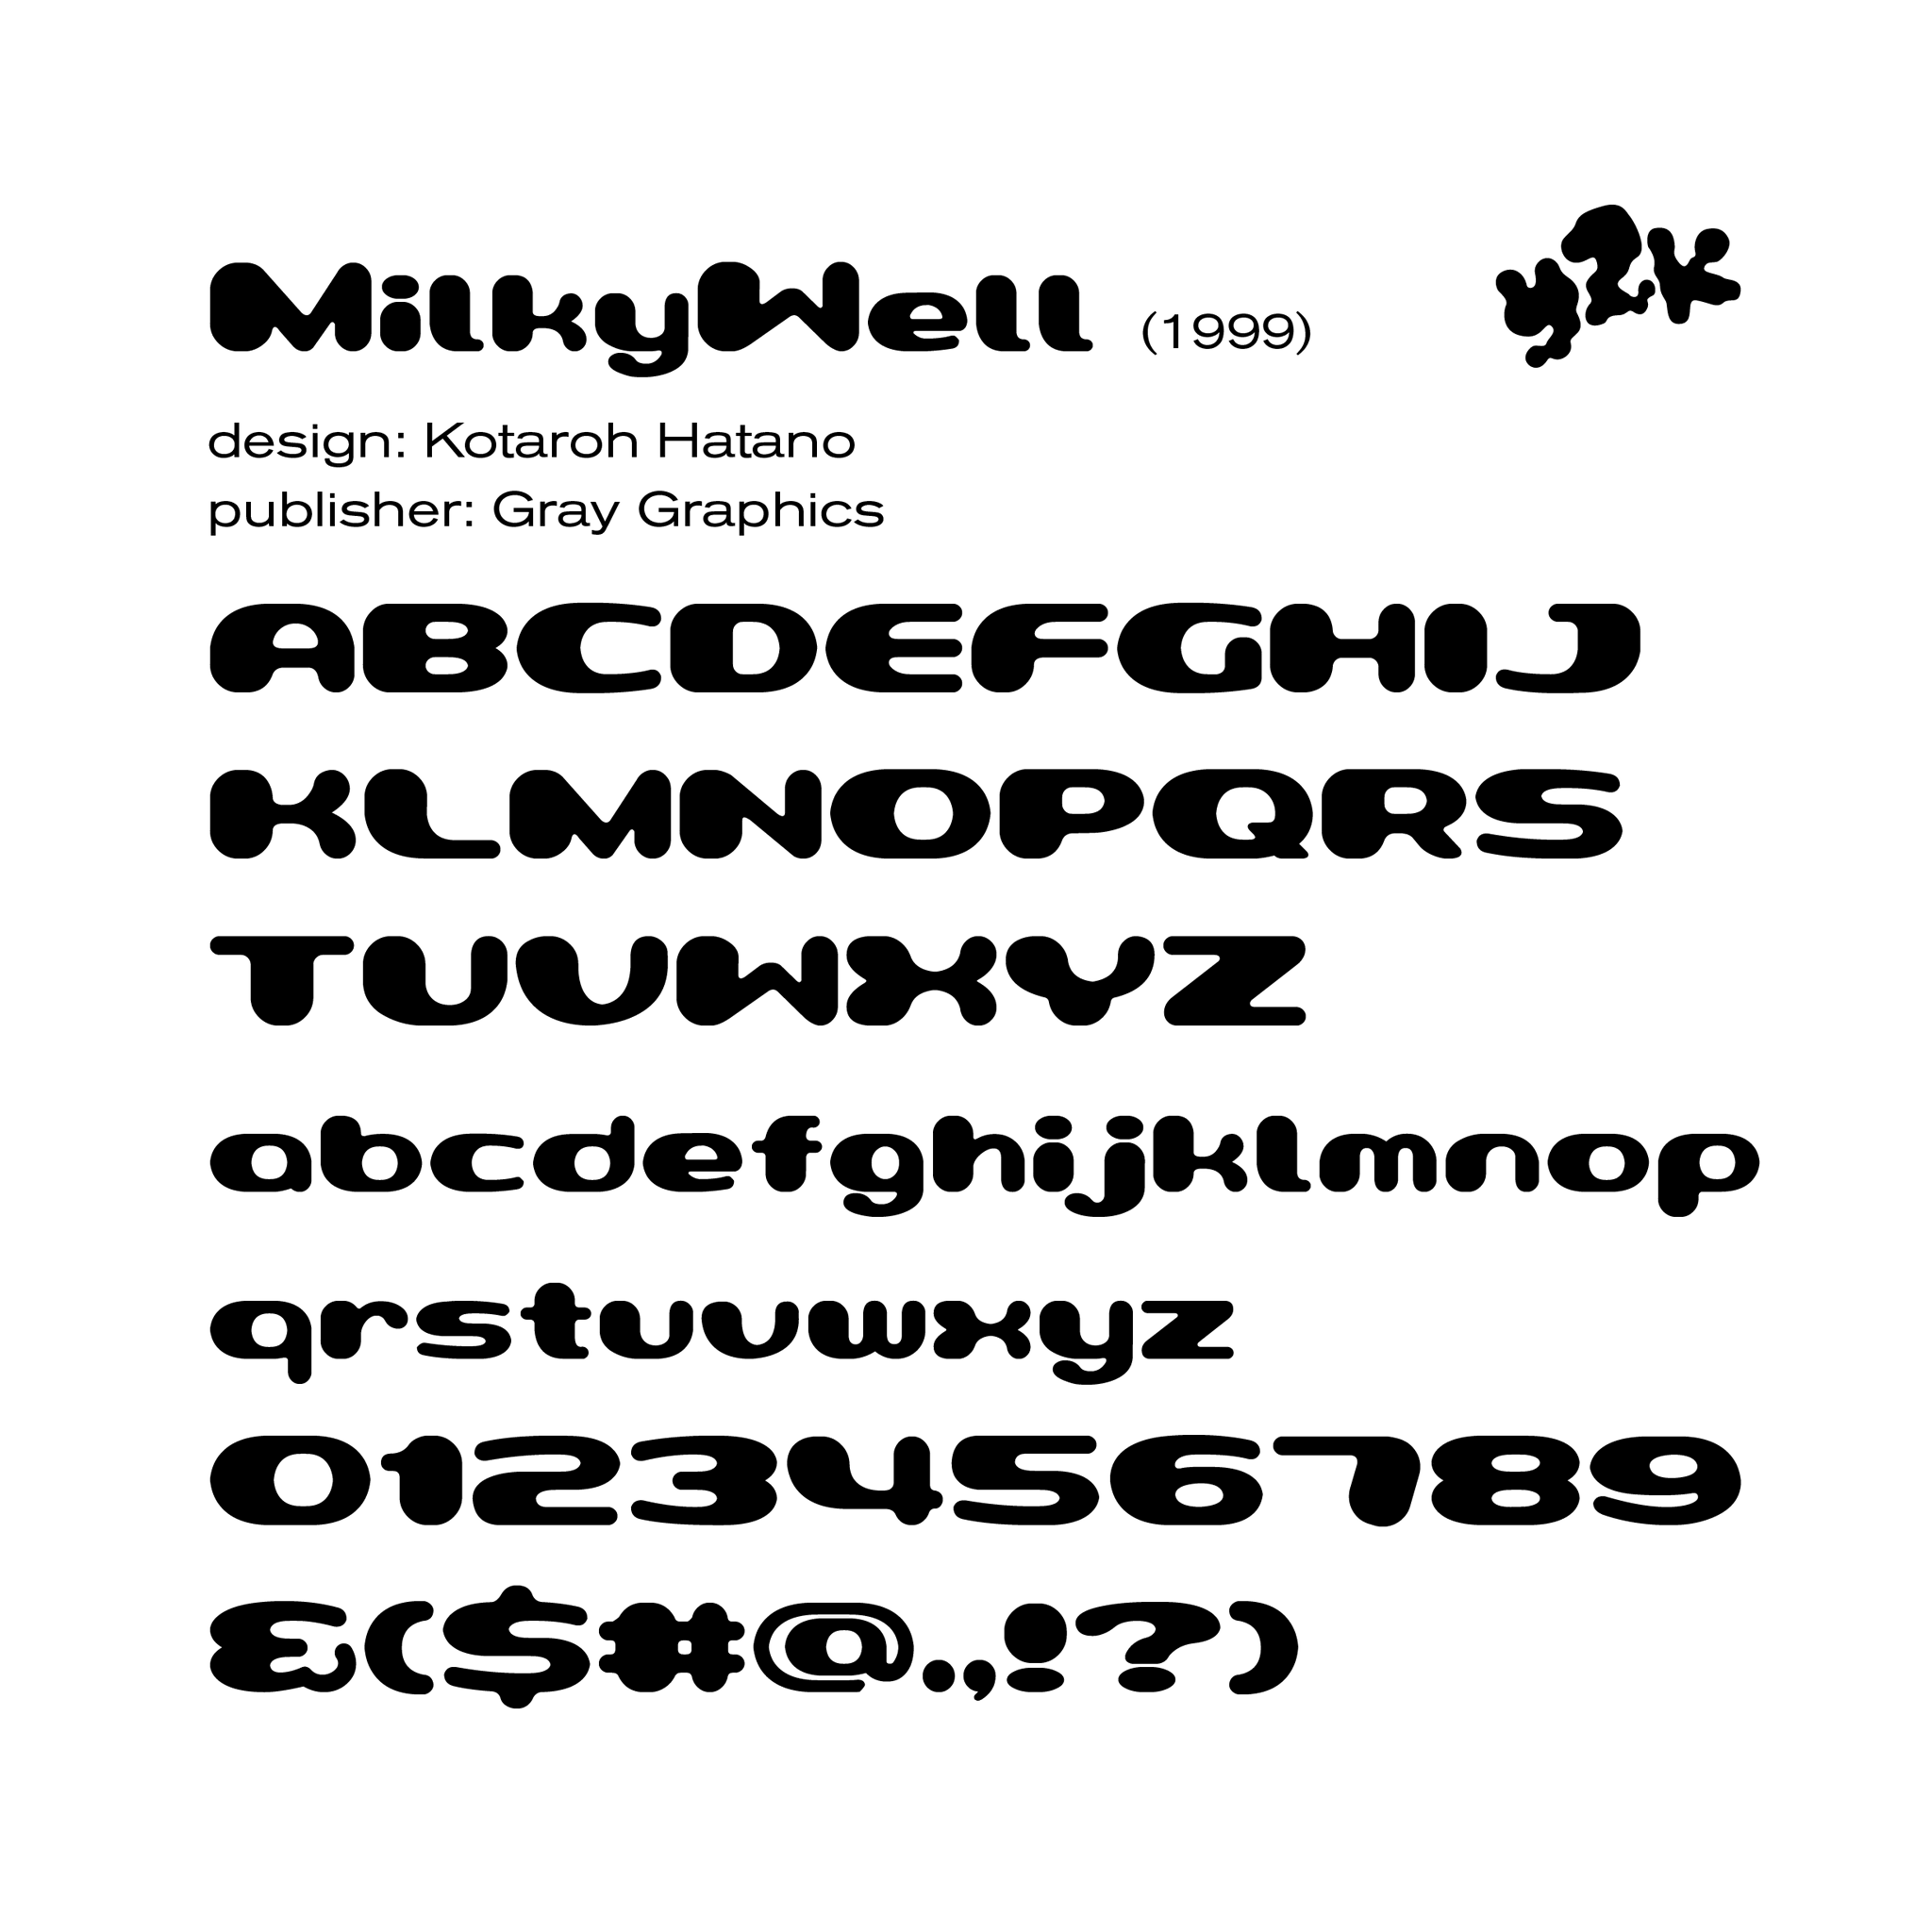 y2k aesthetic fonts - on dafont.com 